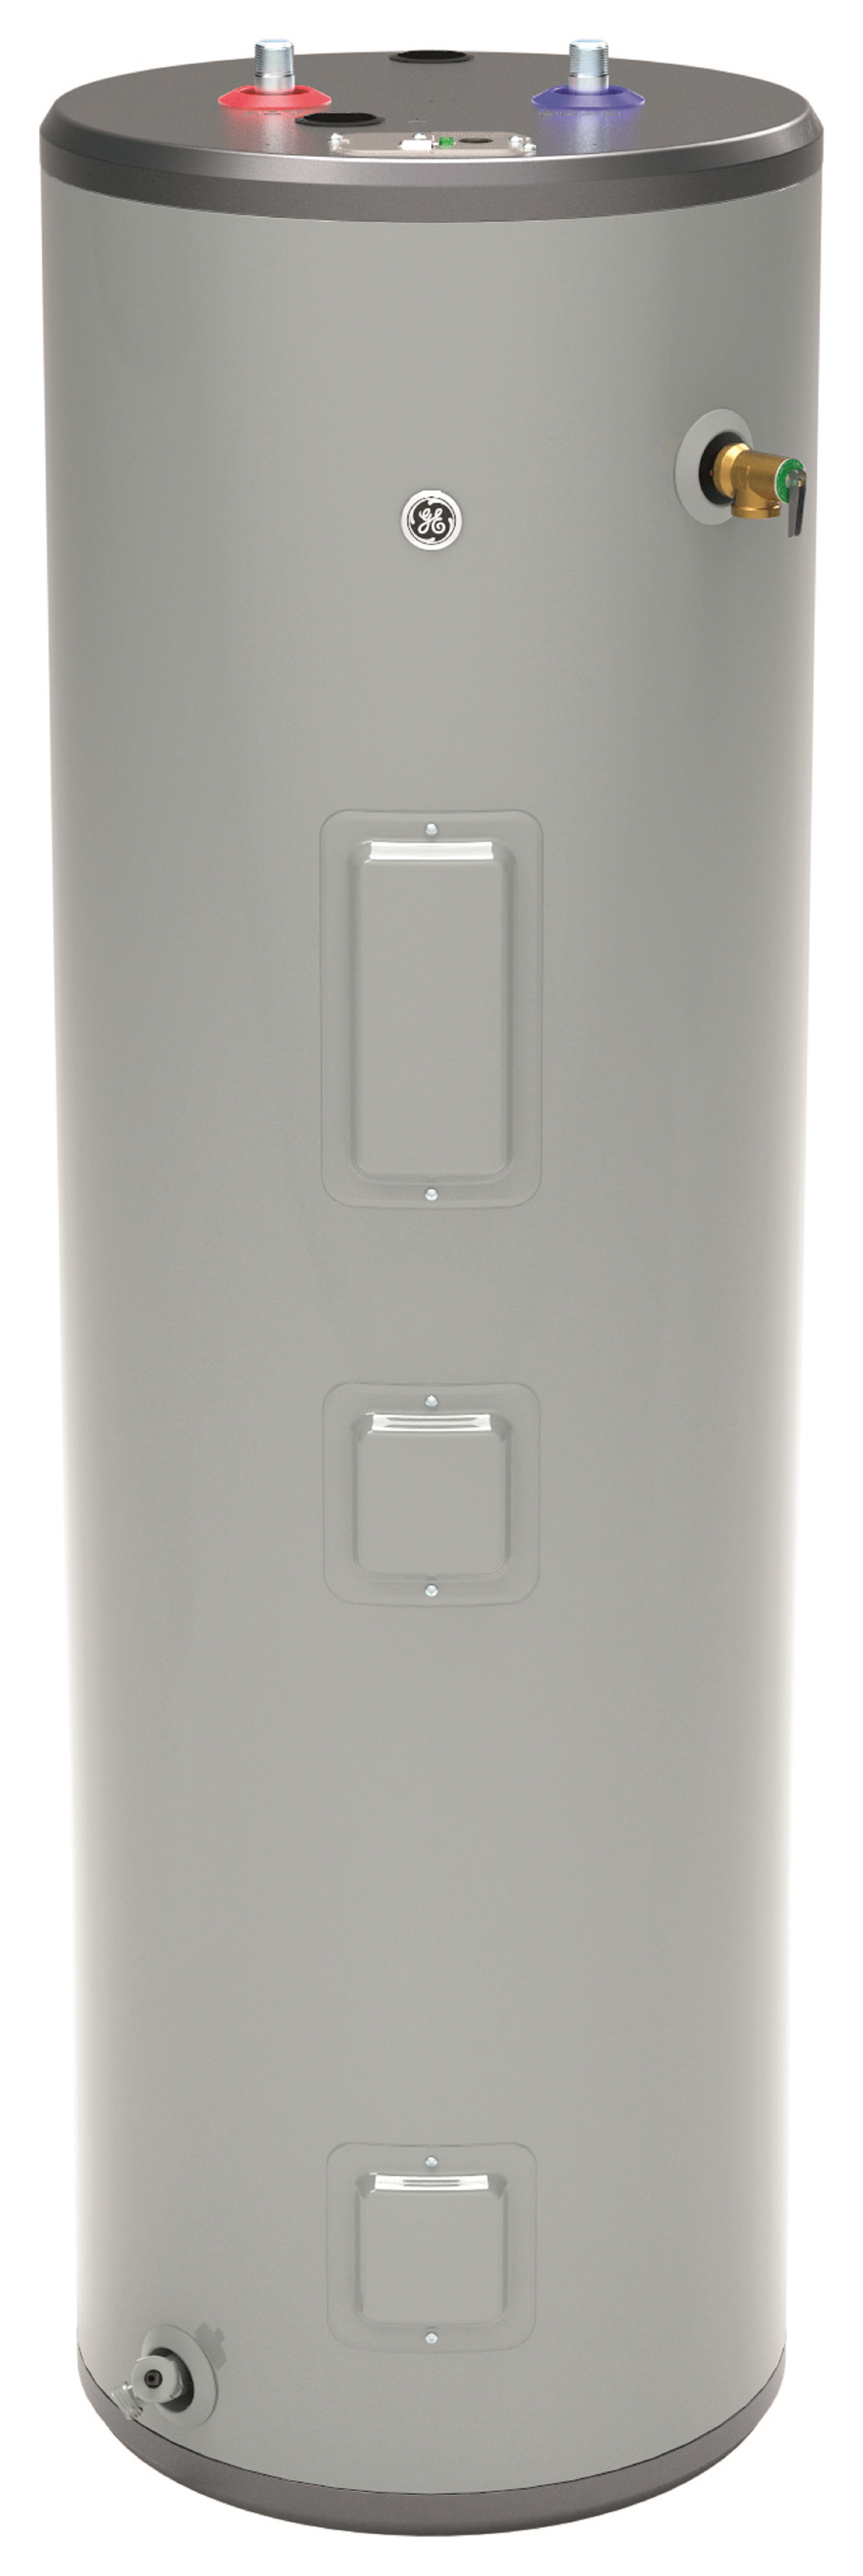 GE Appliances GE40L08BSM 40gal Tall Electric Water Heater &#8211; Gray